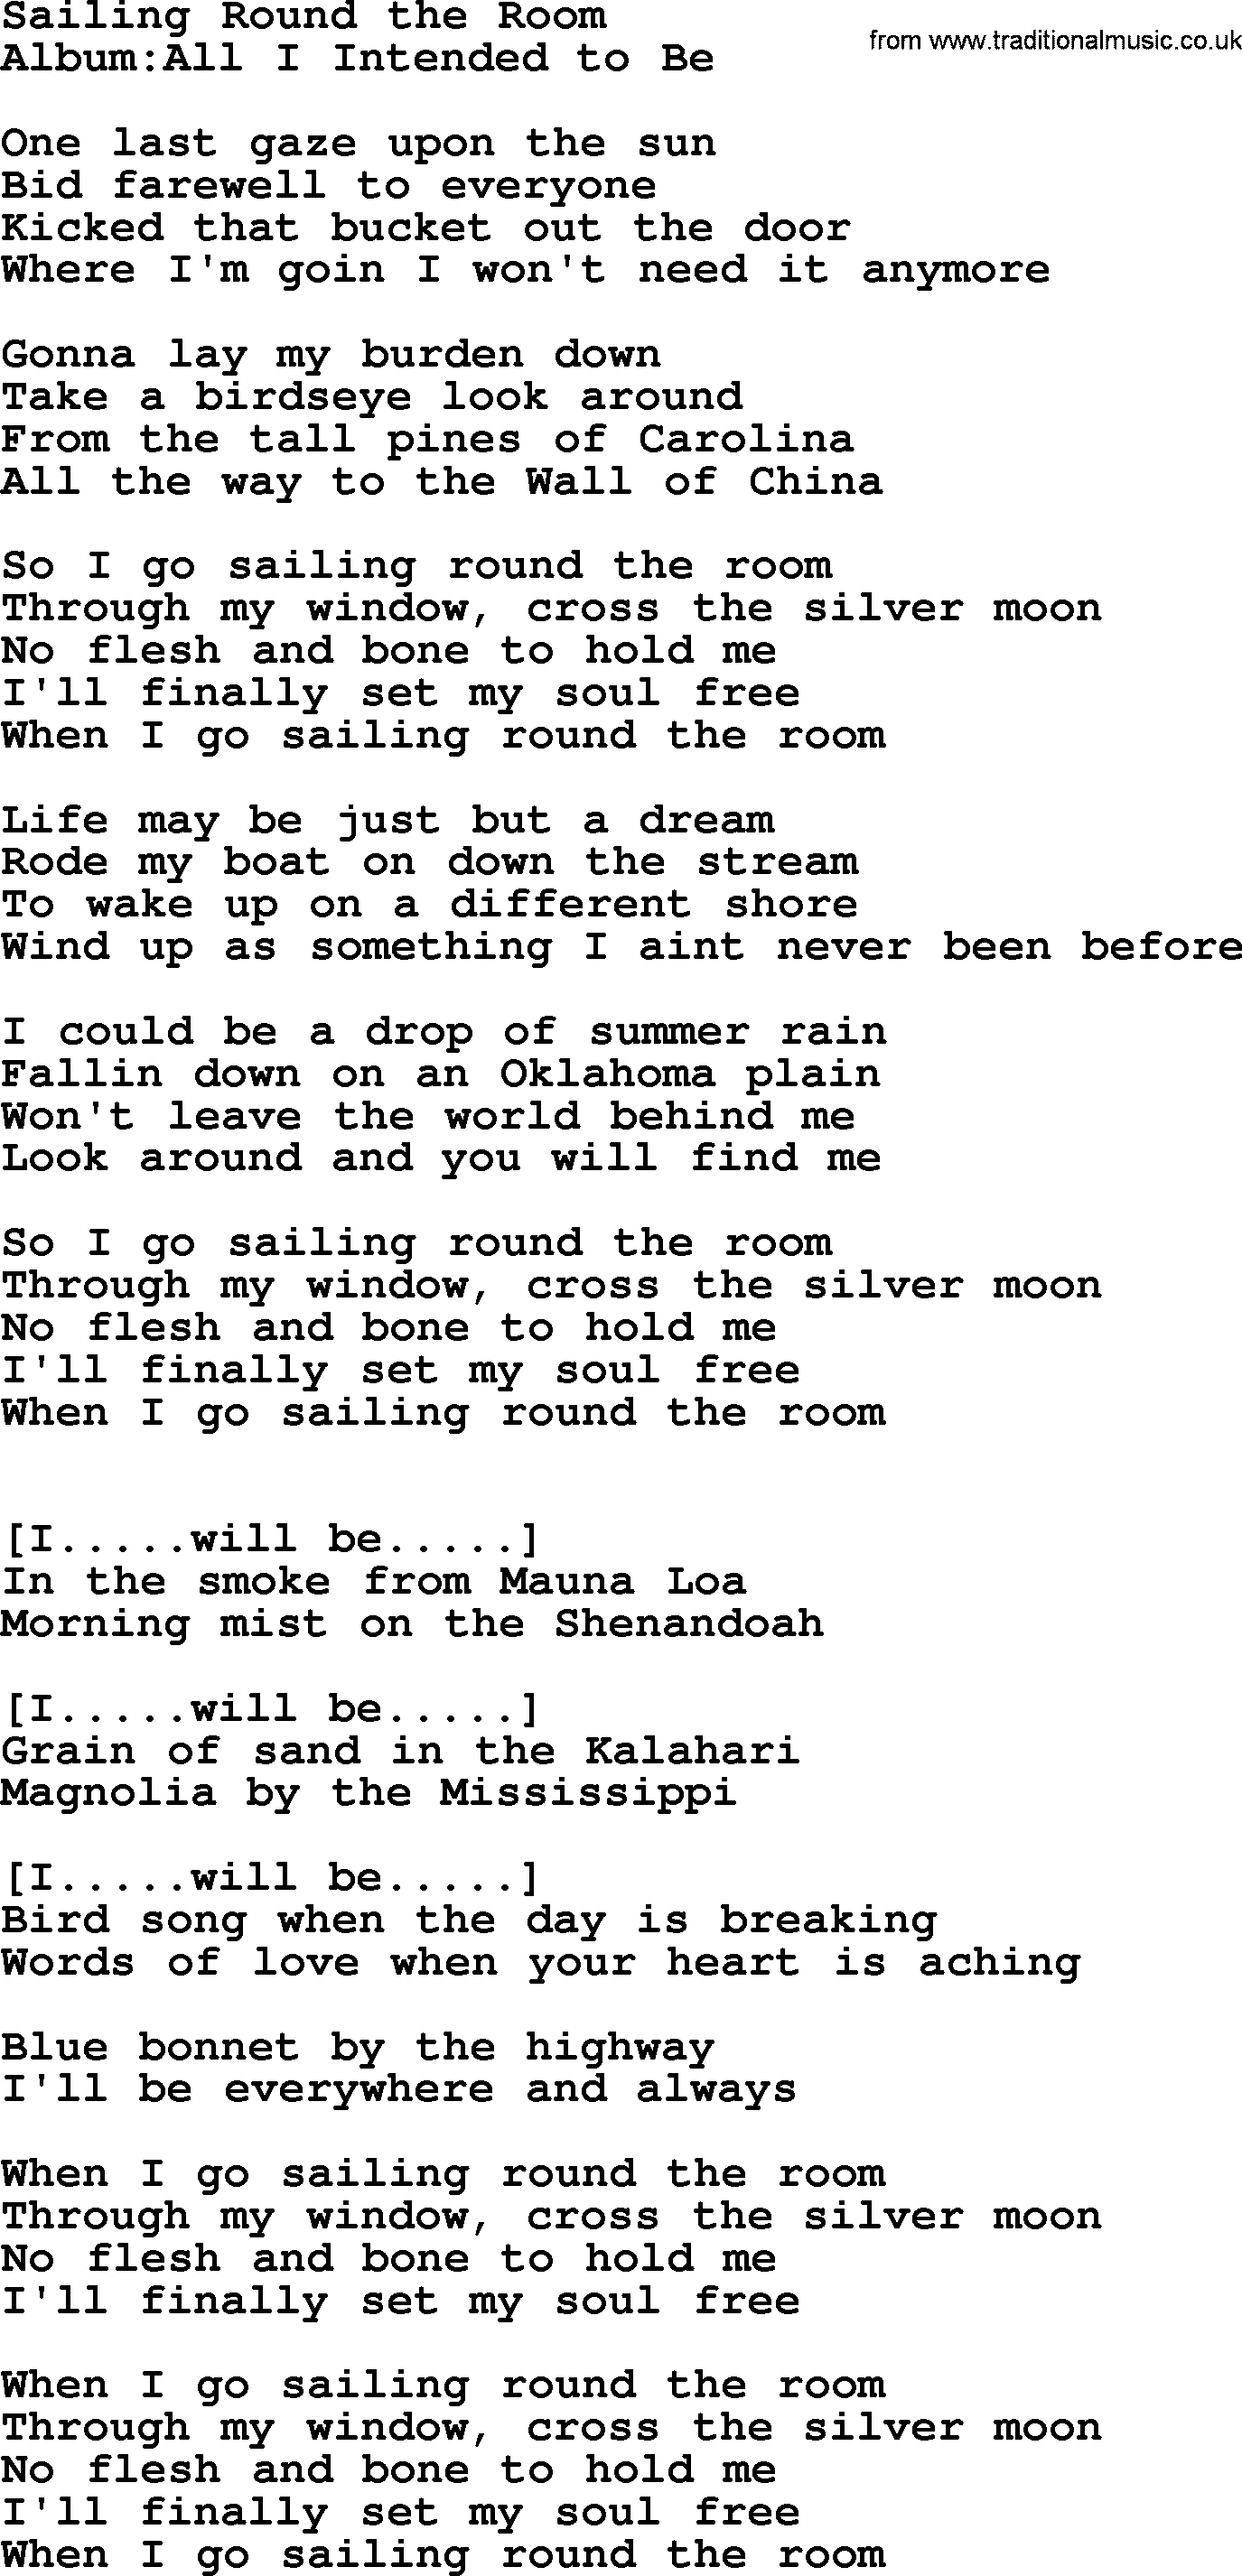 Emmylou Harris song: Sailing Round the Room lyrics